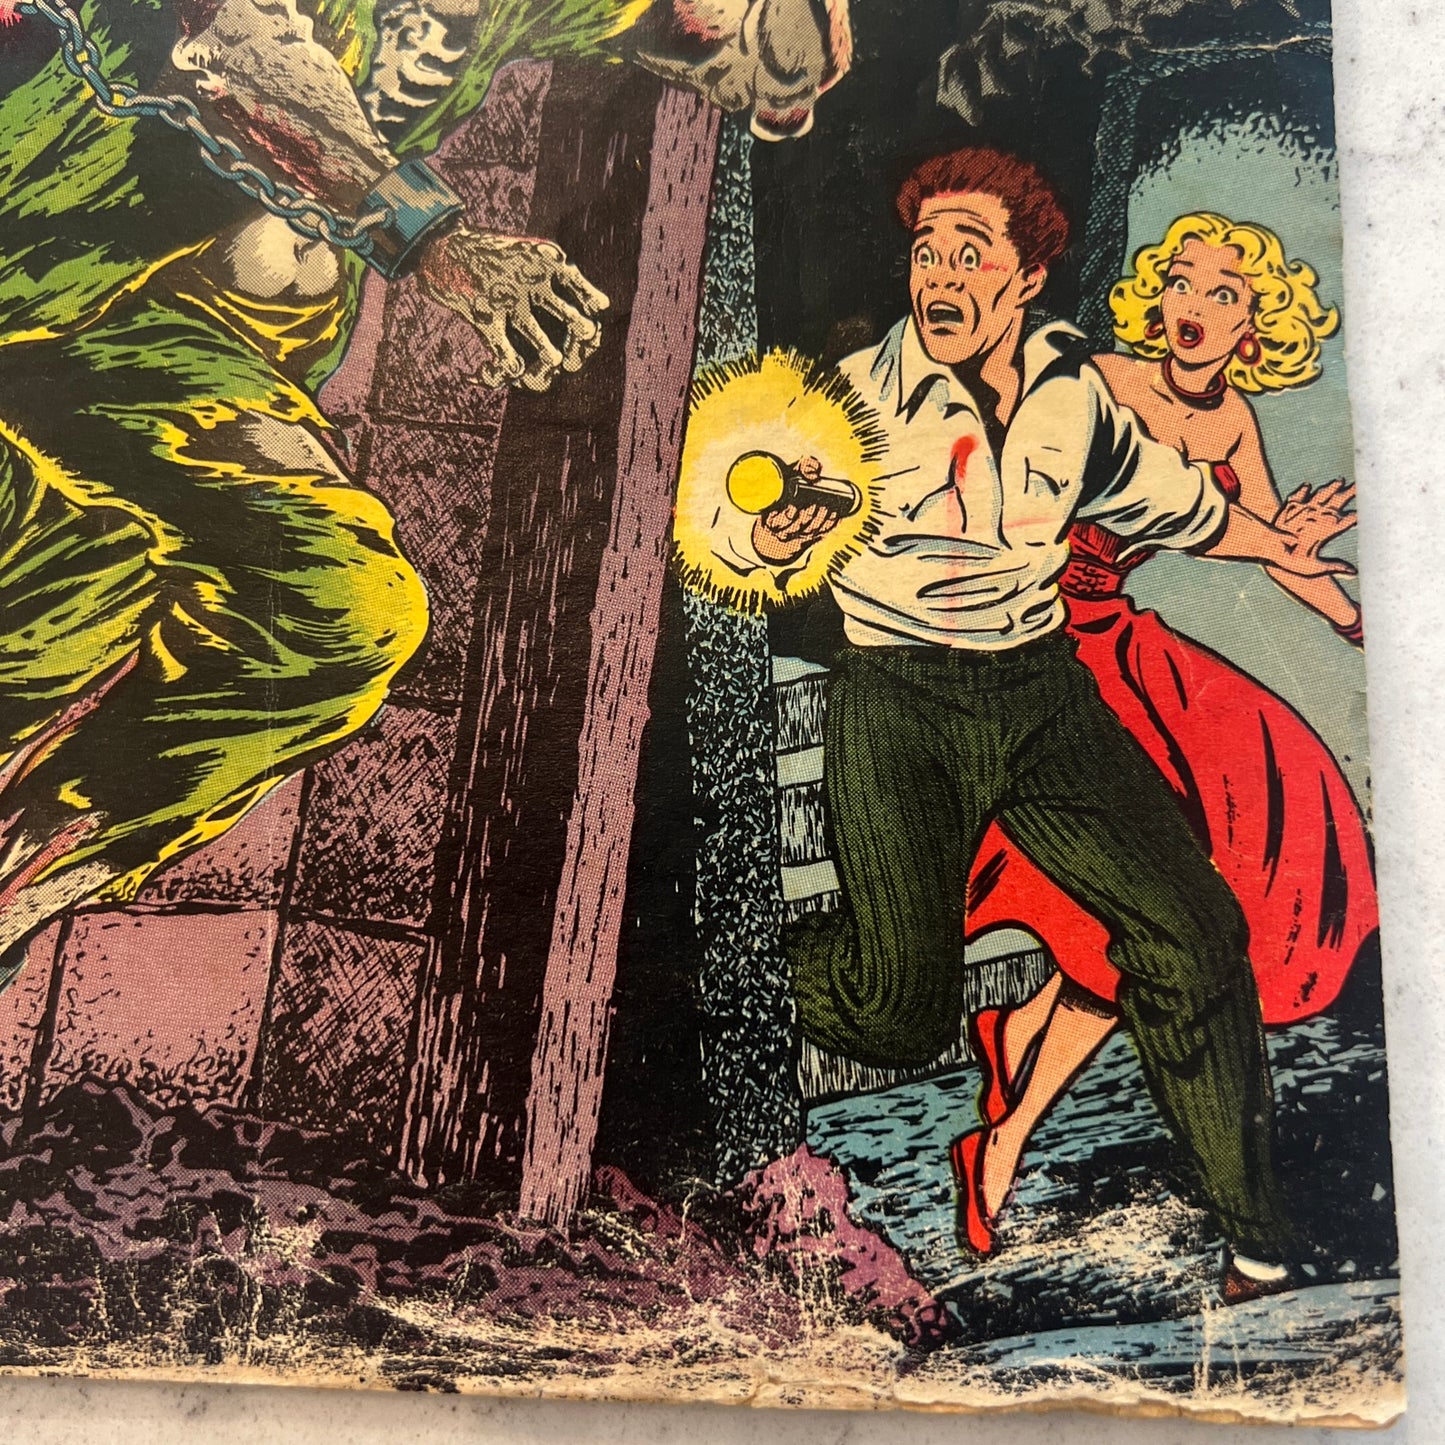 Strange Tales #24 (Atlas/Marvel/1953) Pre Code Horror